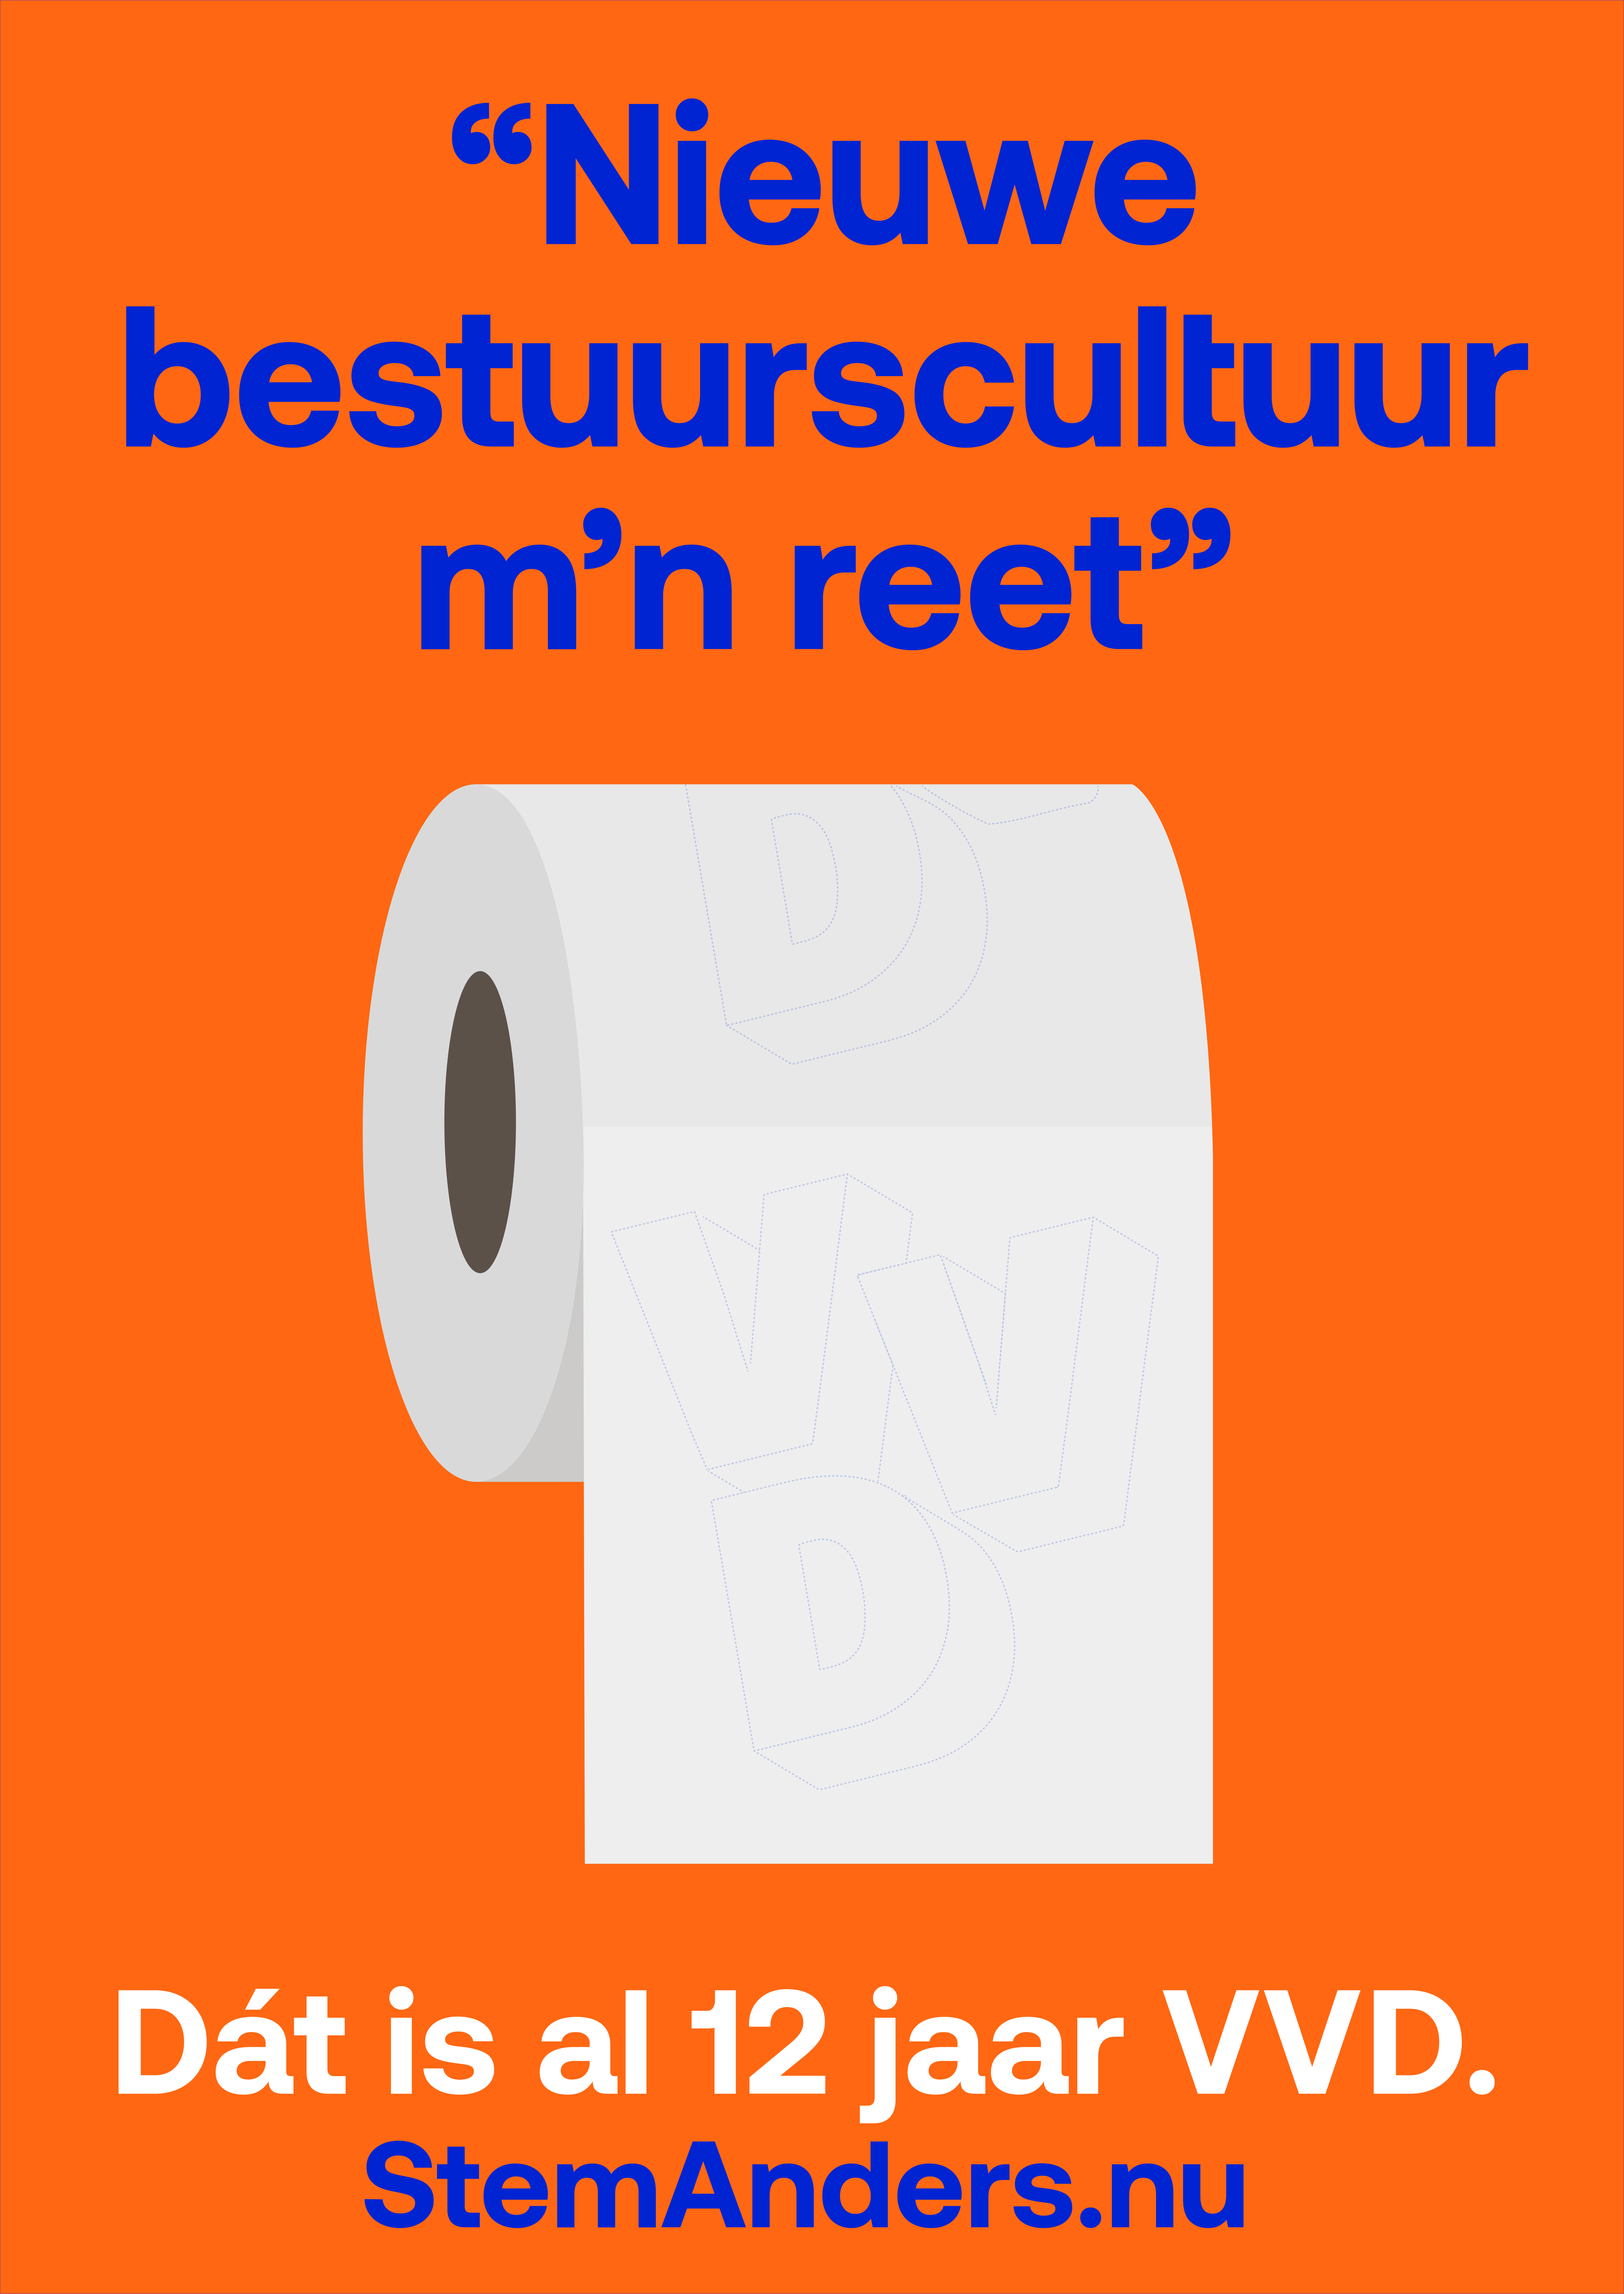 Oranje poster met tekst "Nieuwe bestuurscultuur m'n reet" en illustratie van een wc-rol. Onder de tekst: "Dat is al 12 jaar VVD. Stem anders punt nu. 